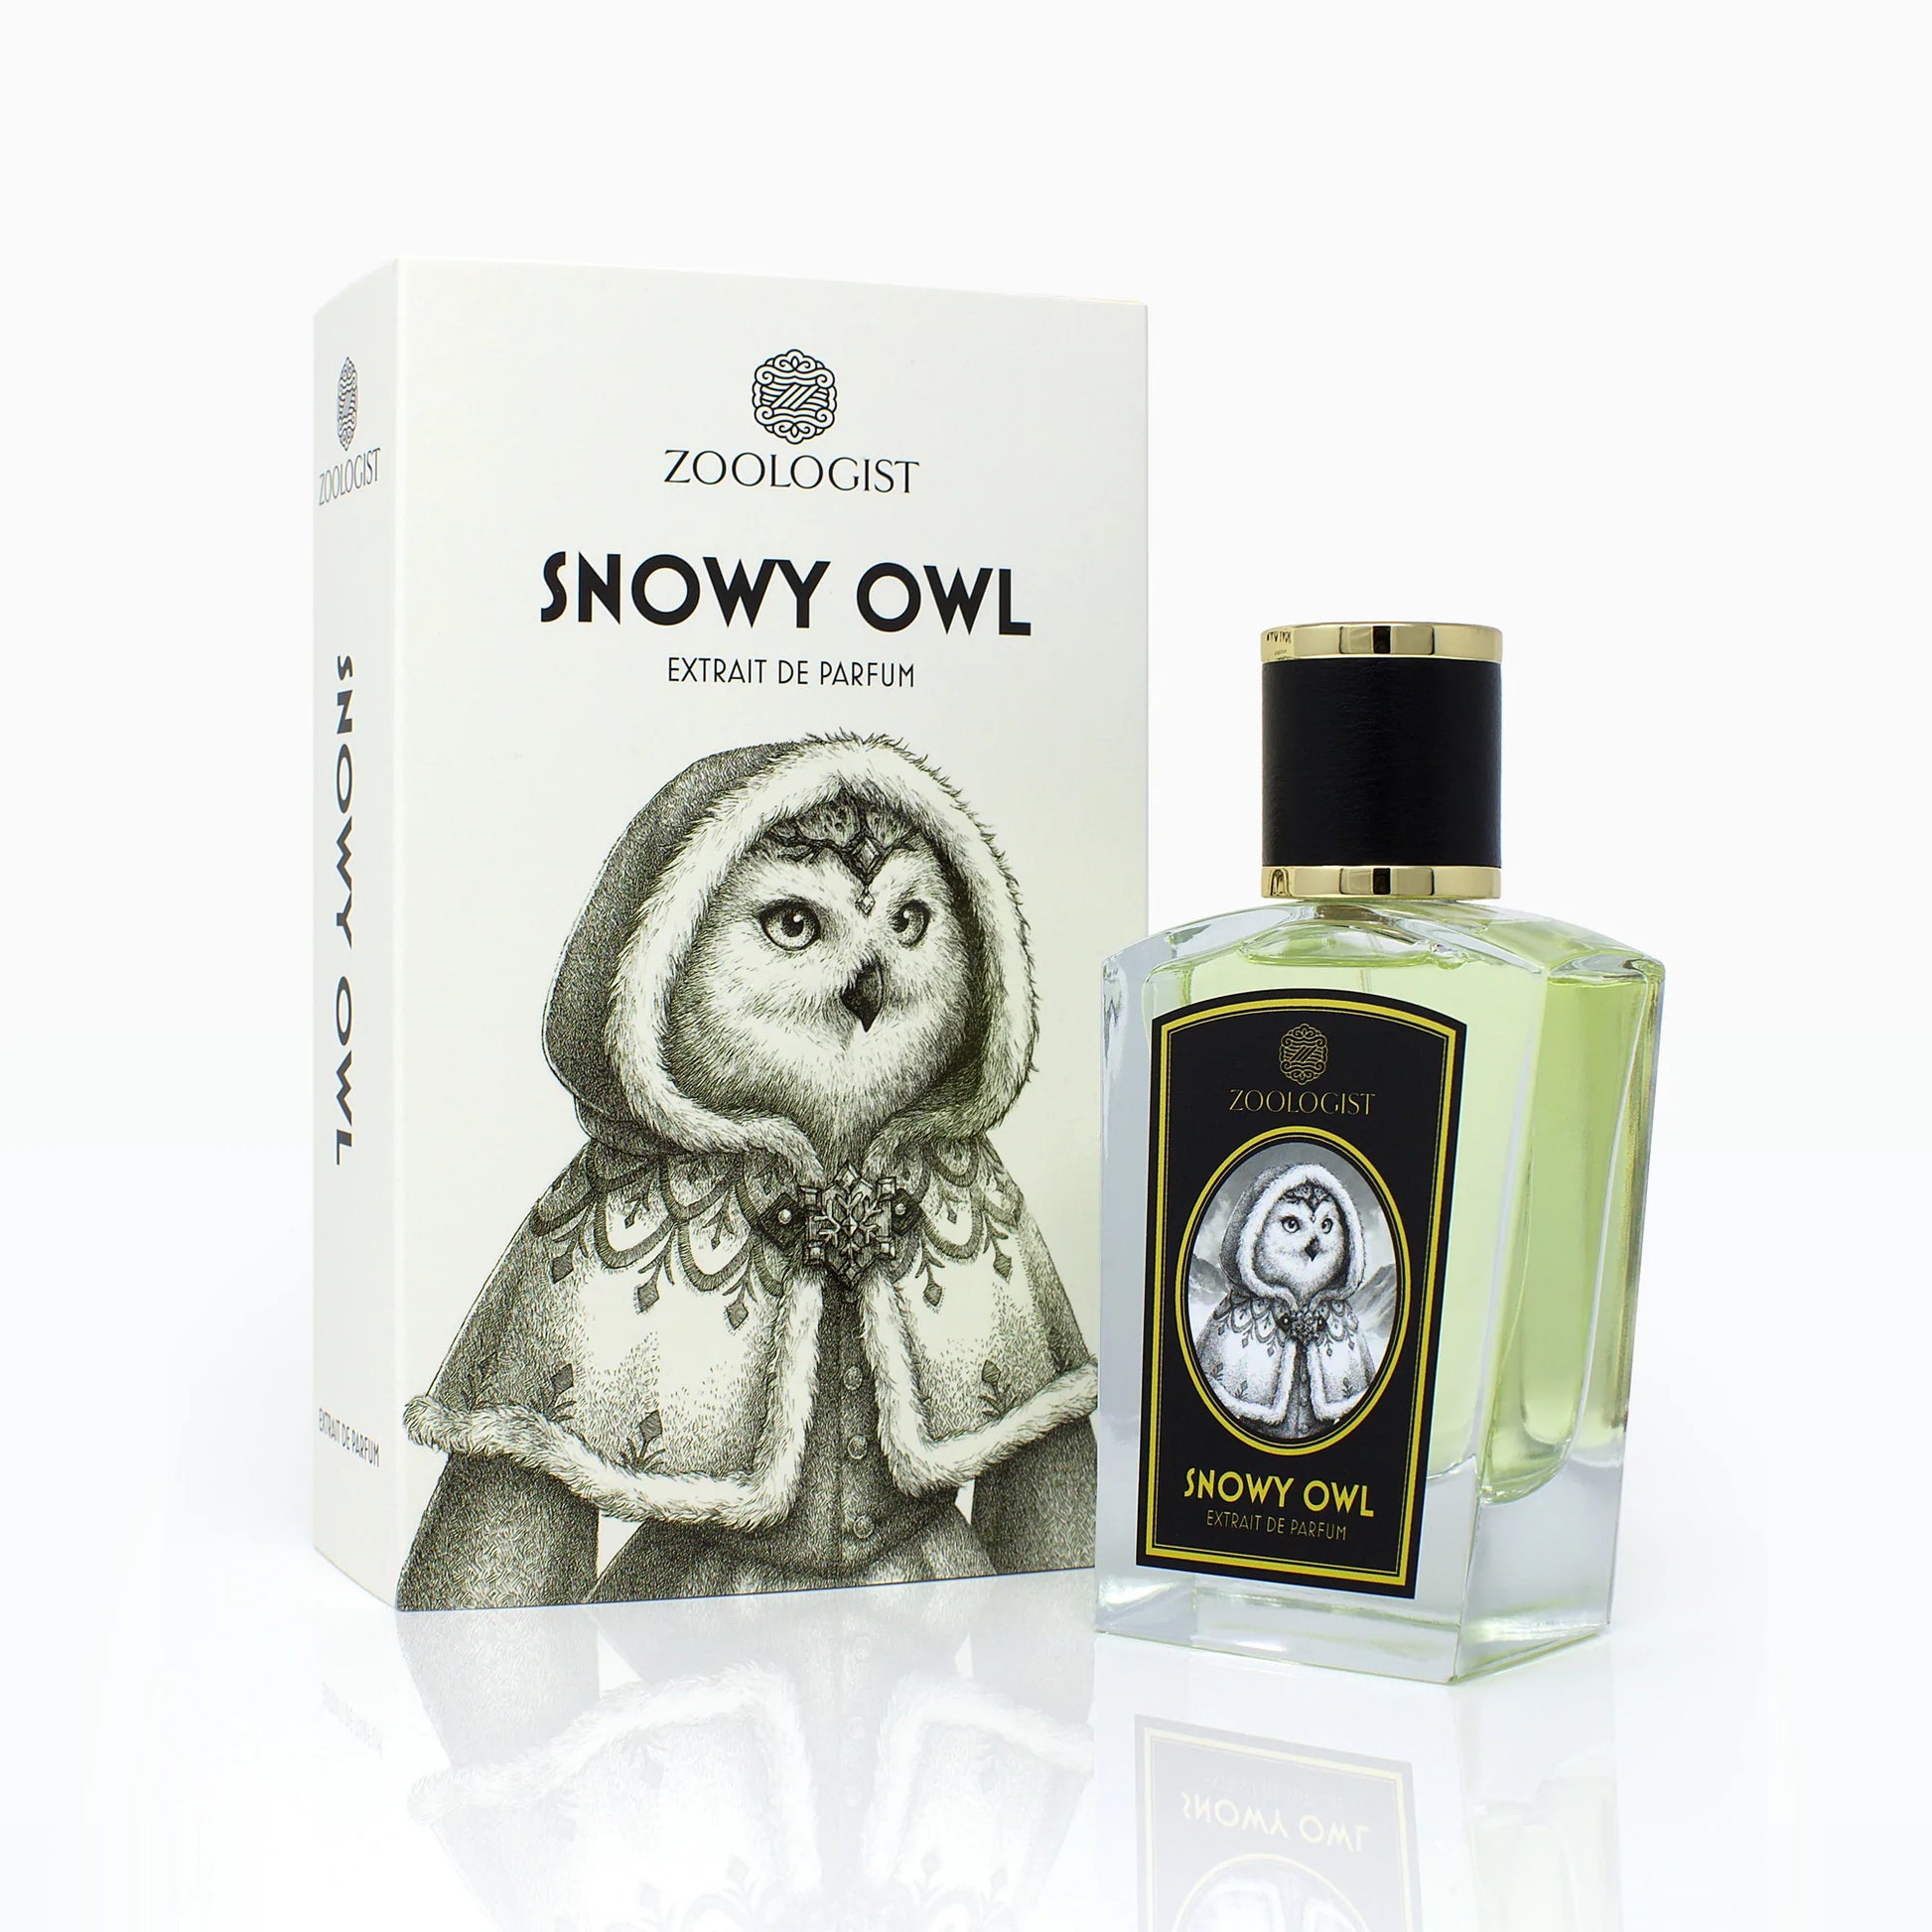 Zoologist - Snowy Owl.